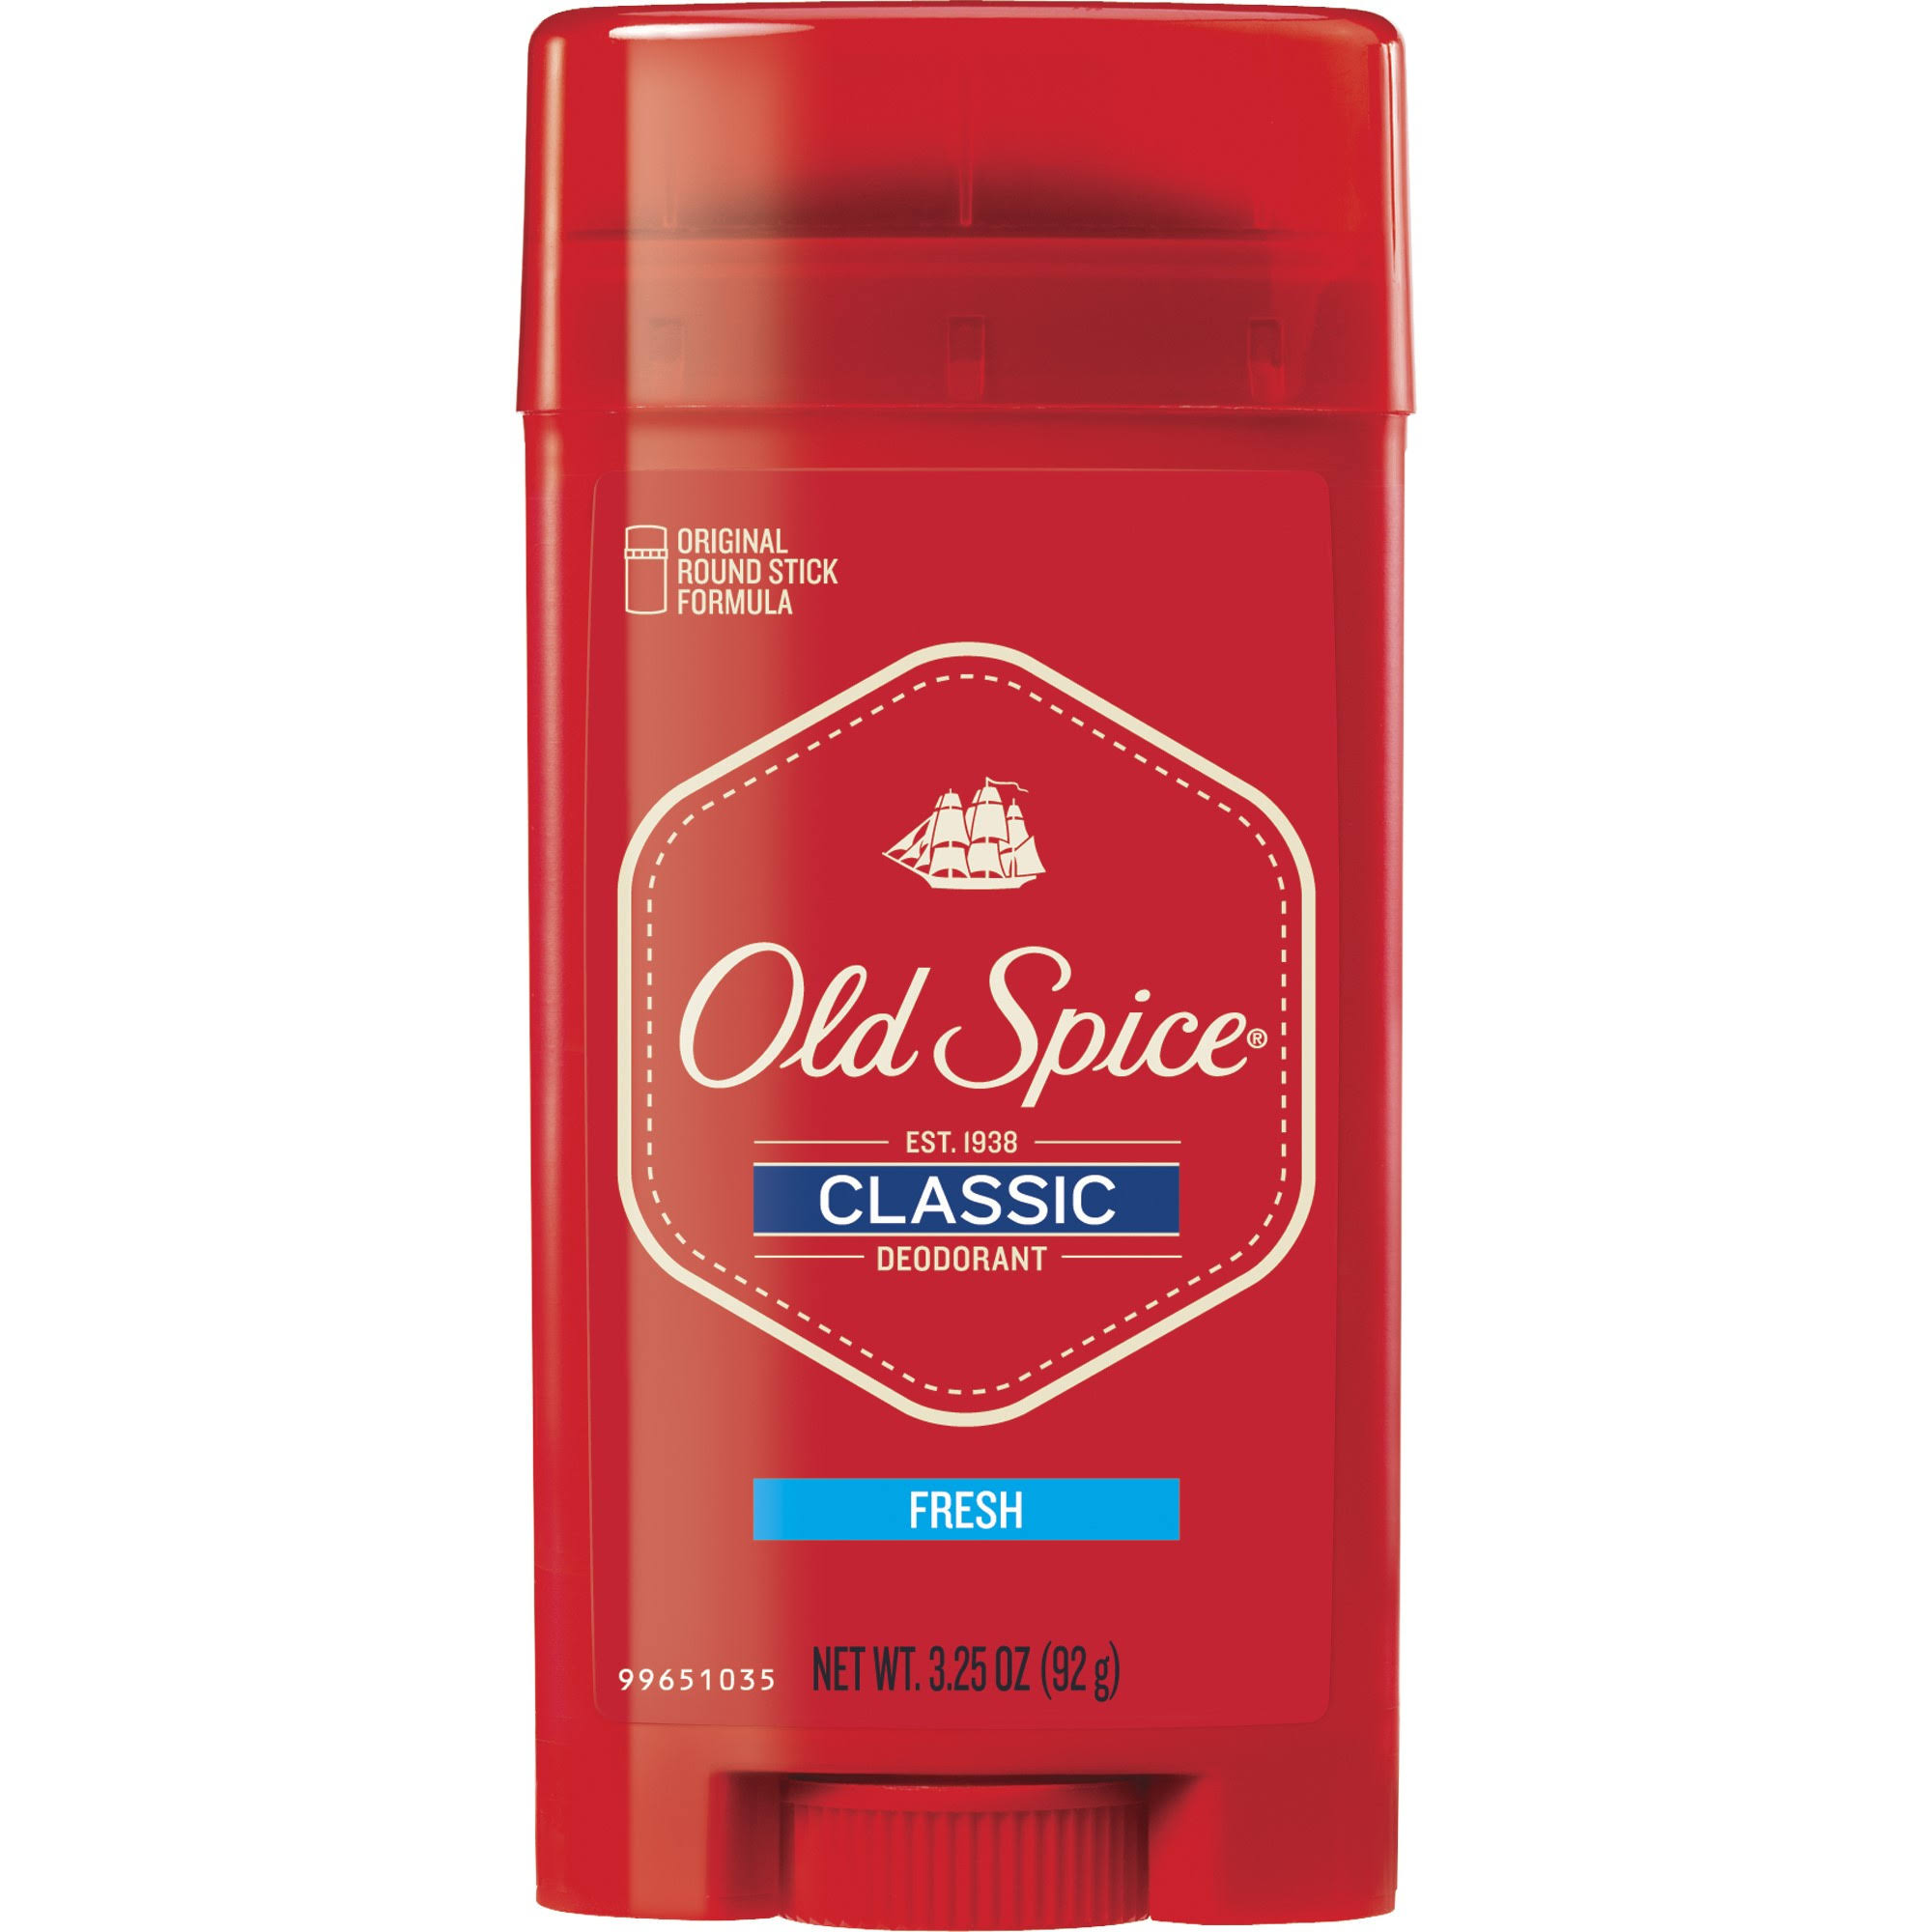 Old Spice Classic Deodorant Stick - 92g, Fresh Scent